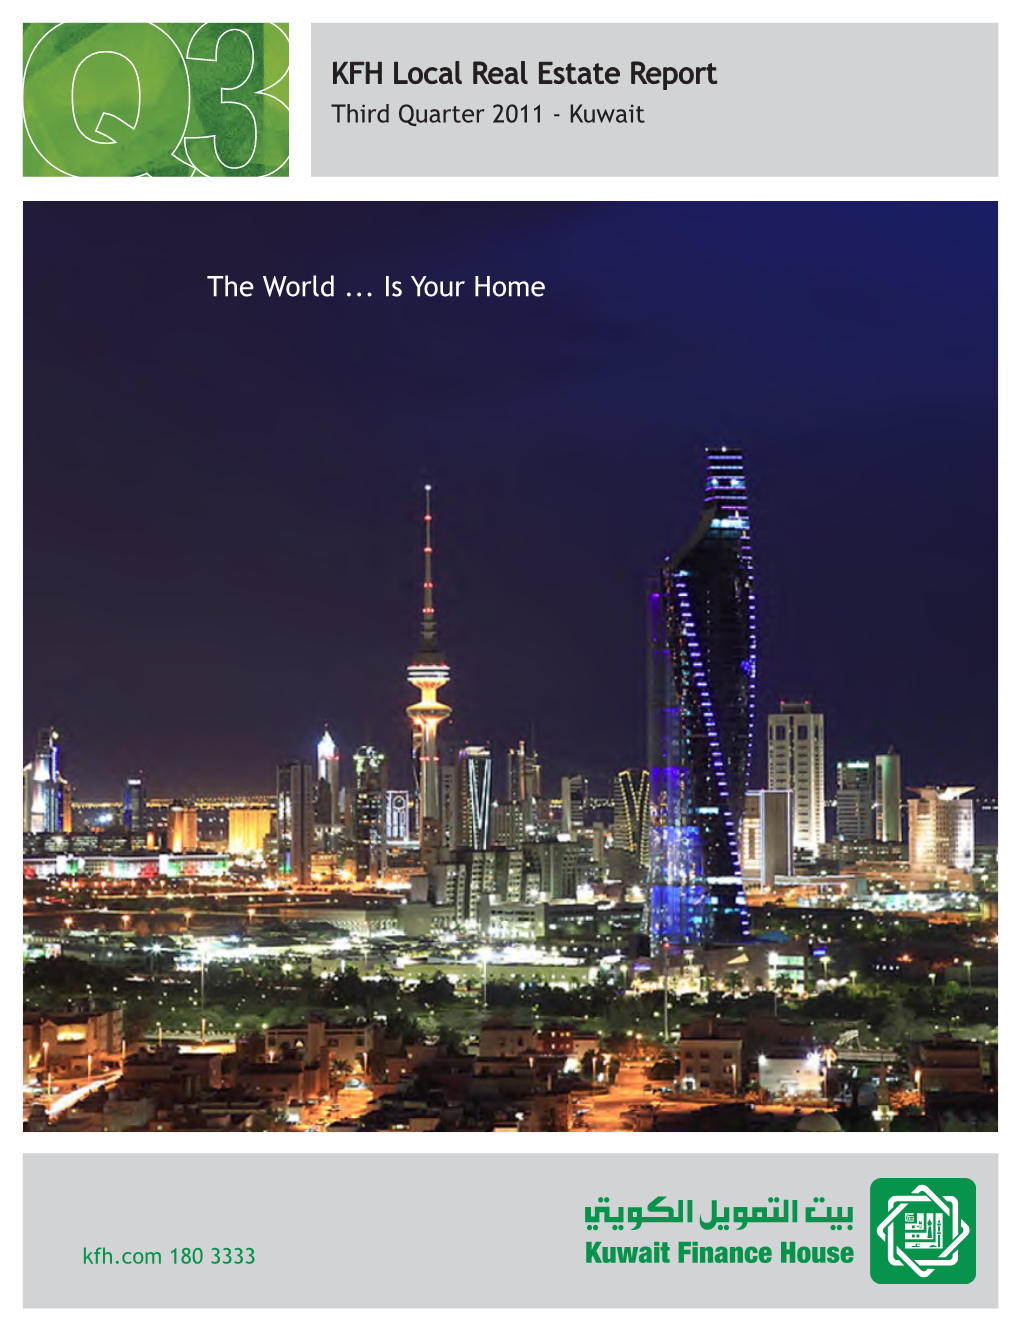 KFH Local Real Estate Report Third Quarter 2011 - Kuwait